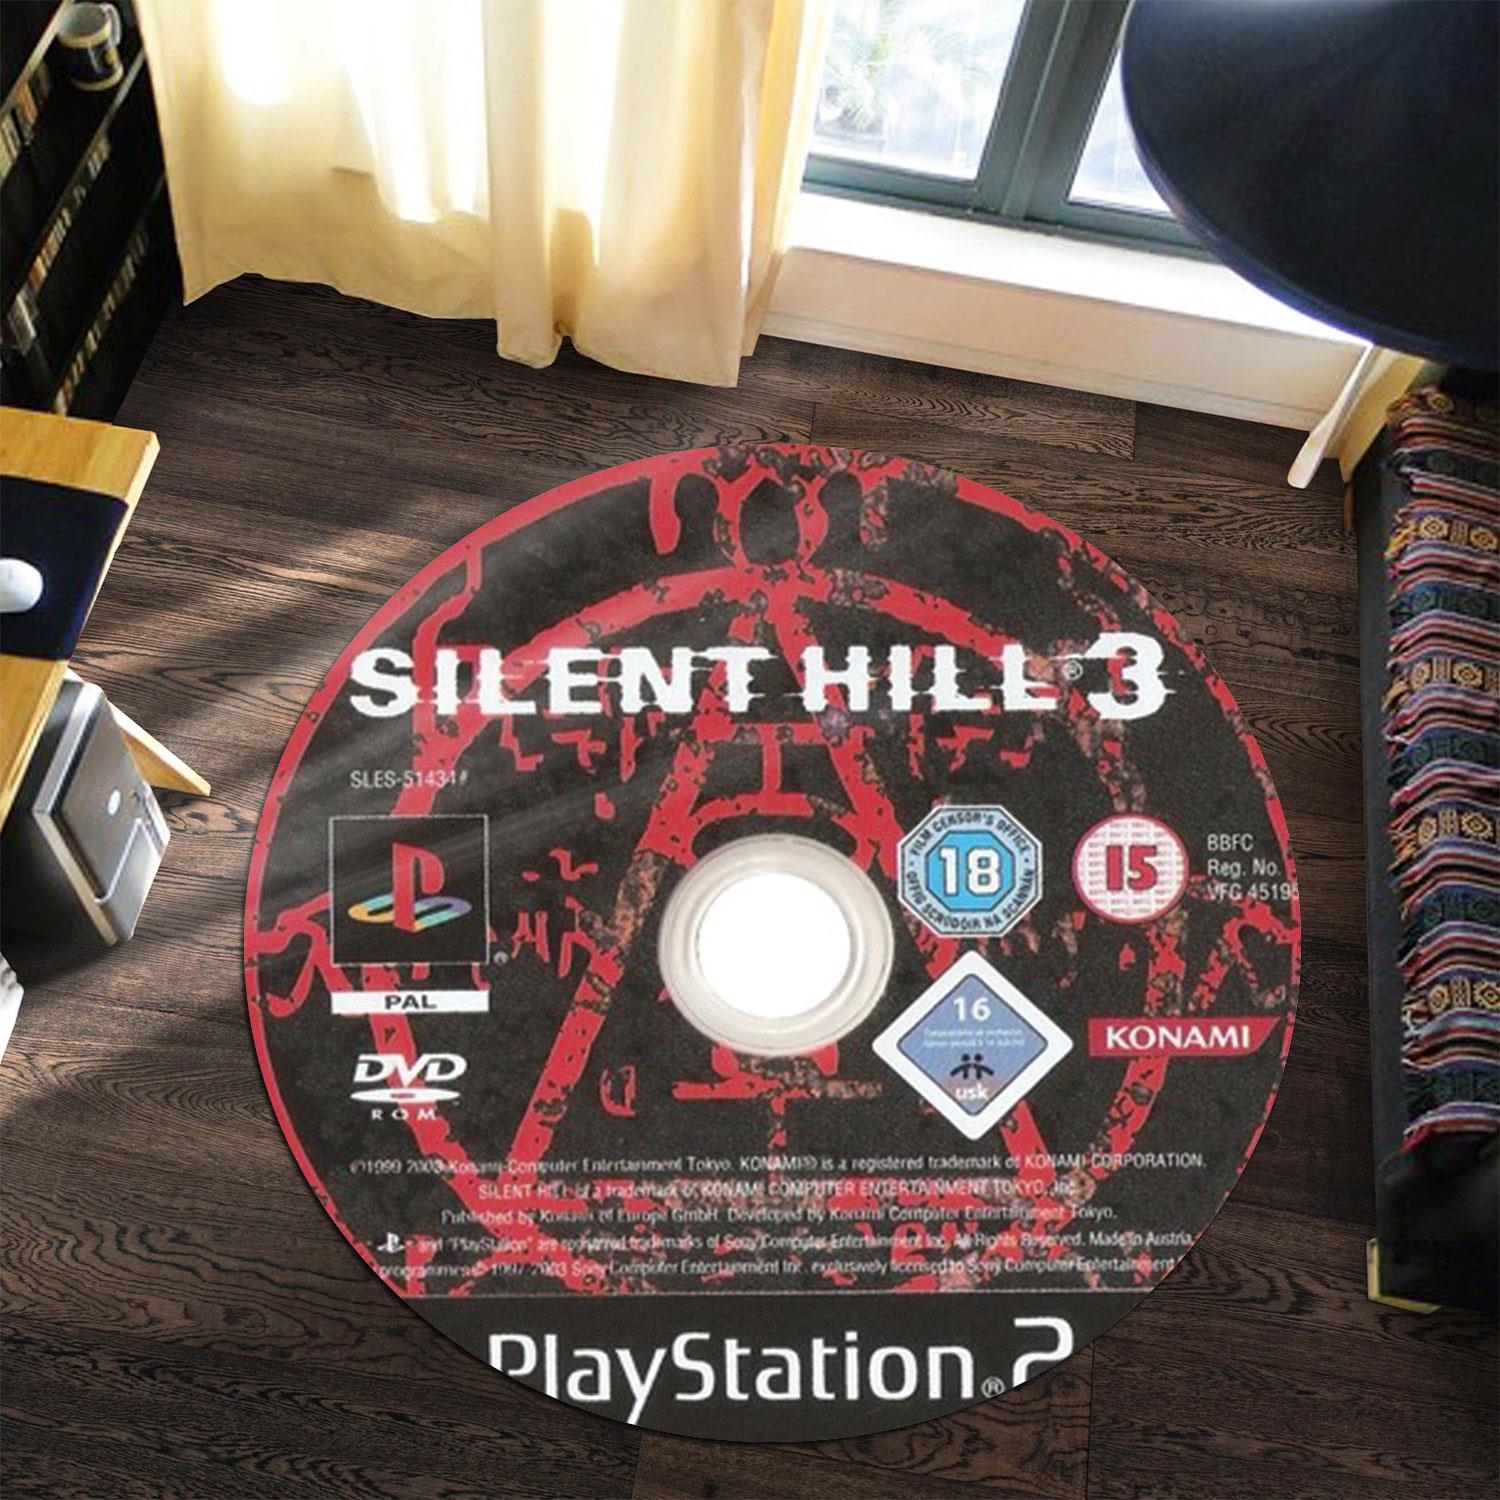 Silent Hill 3 Cd1 Disc Round Rug Carpet